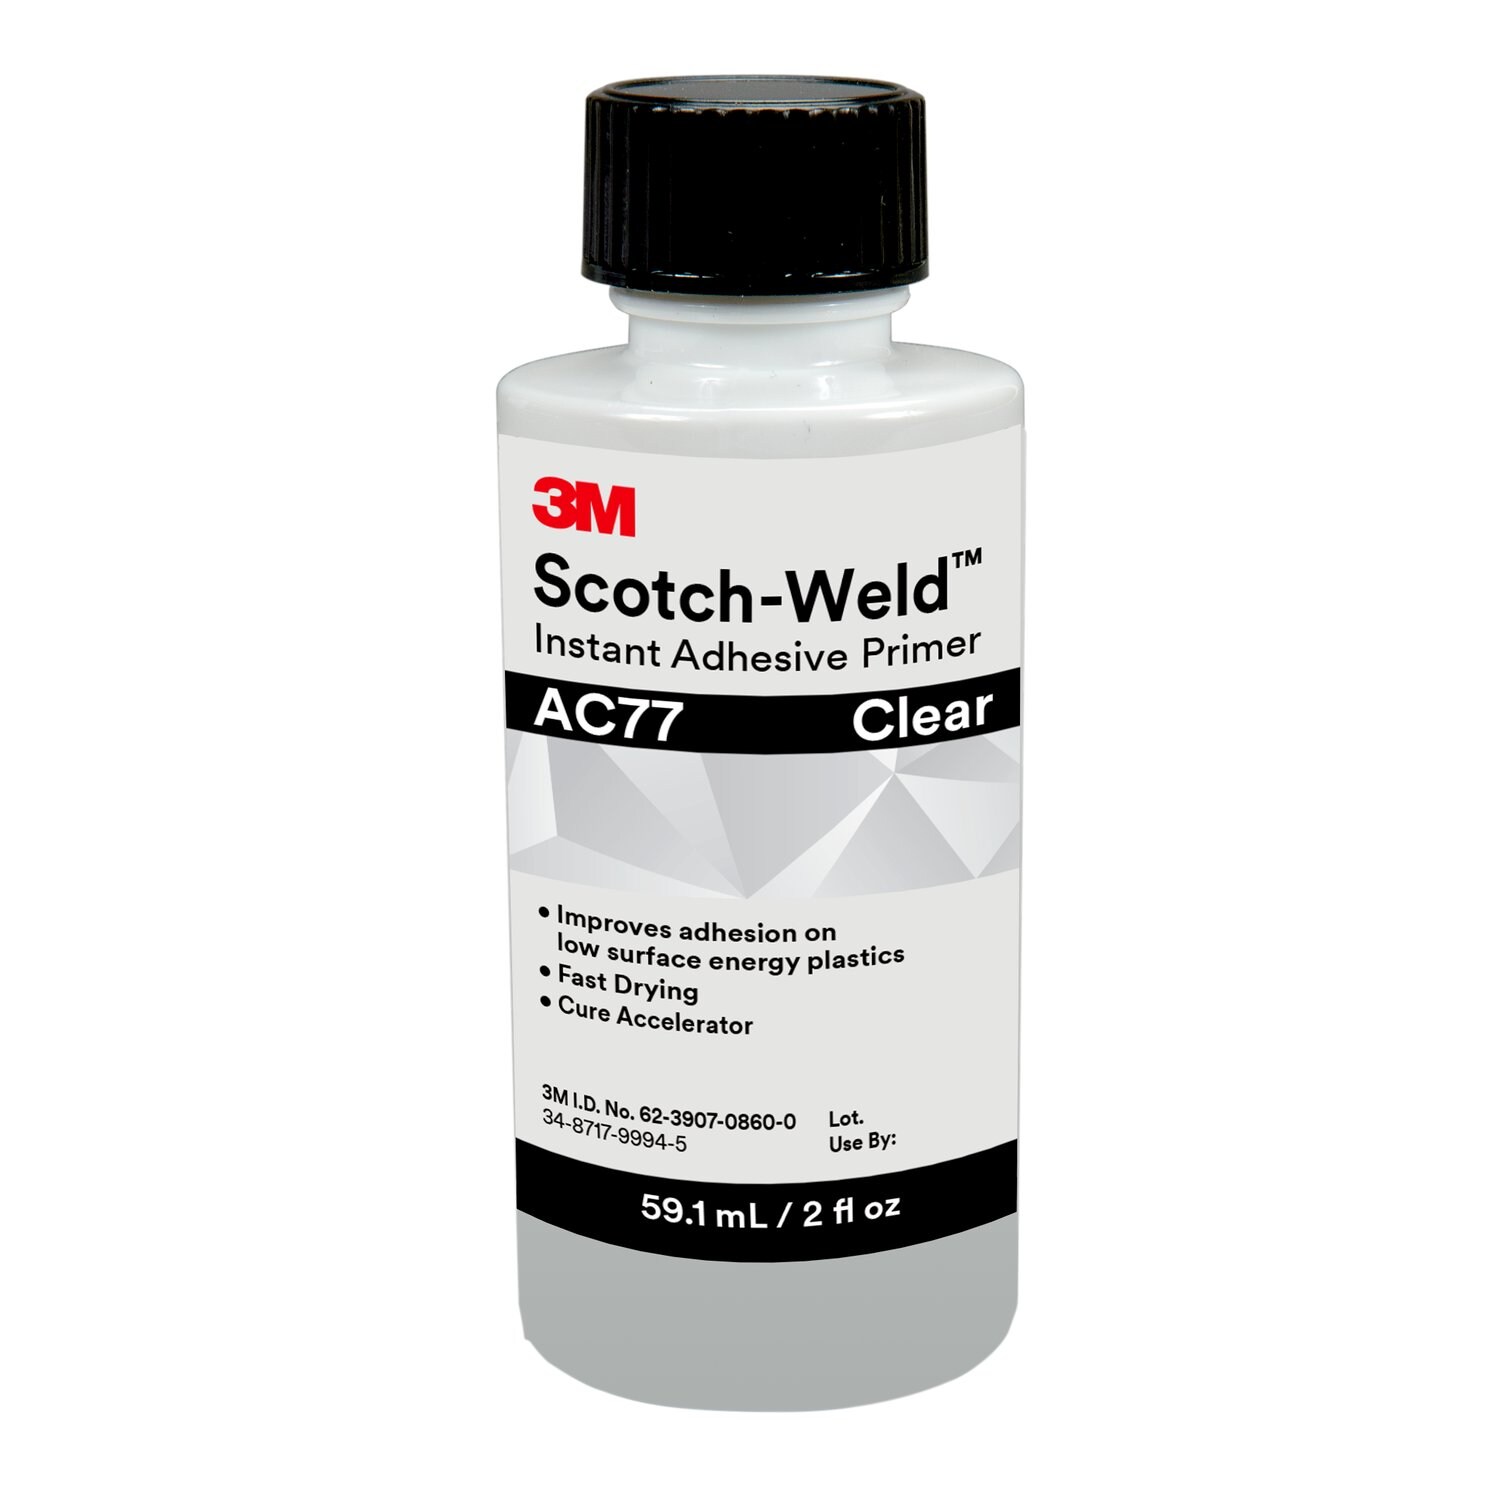 7100039260 - 3M Scotch-Weld Instant Adhesive Primer AC77, Clear, 2 fl oz, 10
Bottles/Case